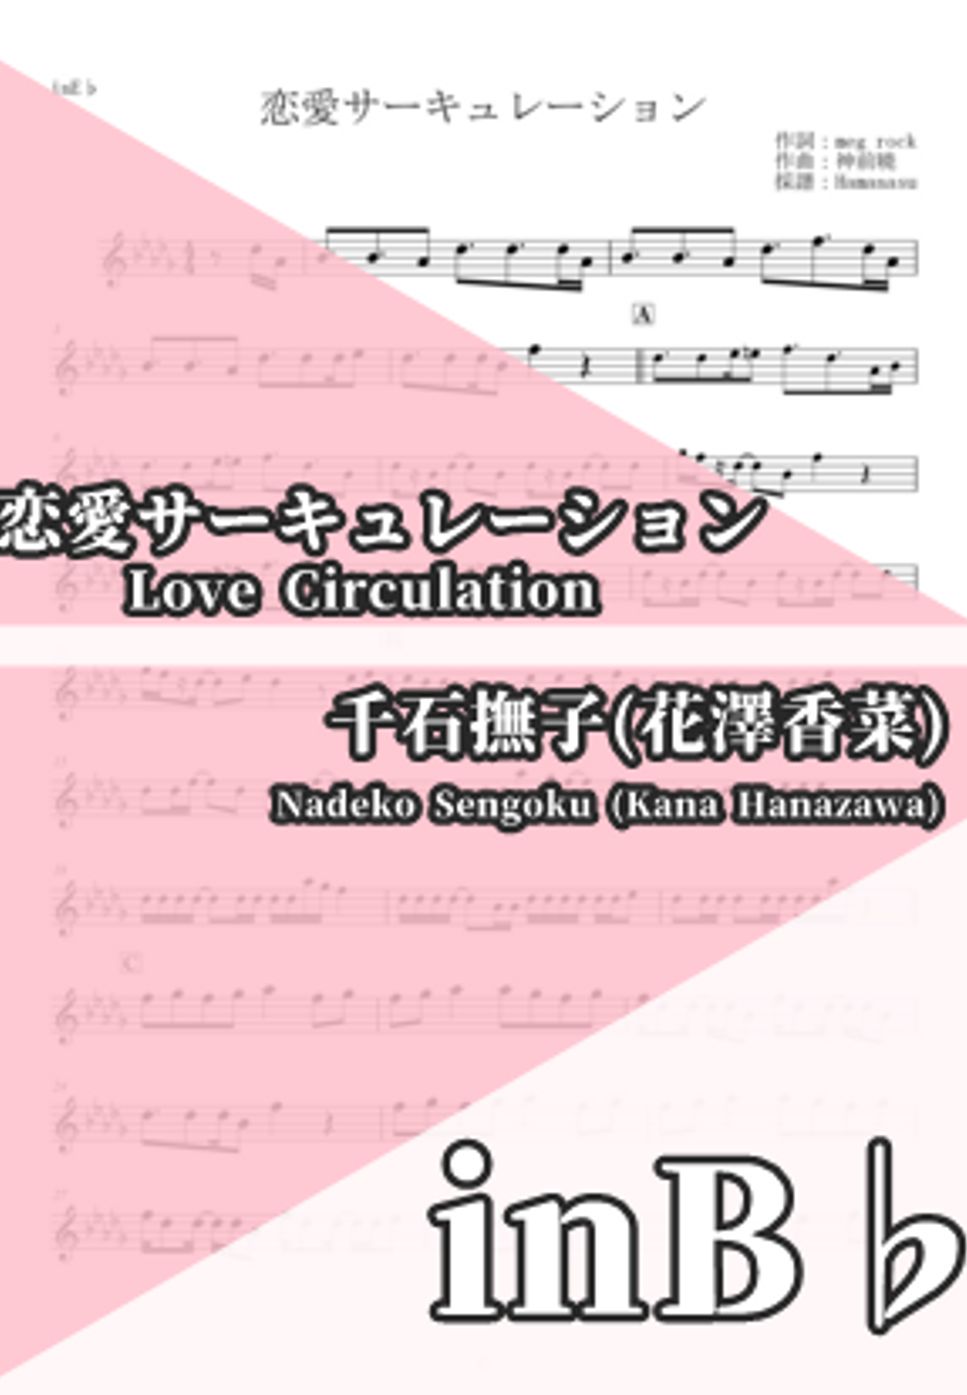 Nadeko Sengoku (Kana Hanazawa) - Love Circulation (inB♭) by Hamanasu